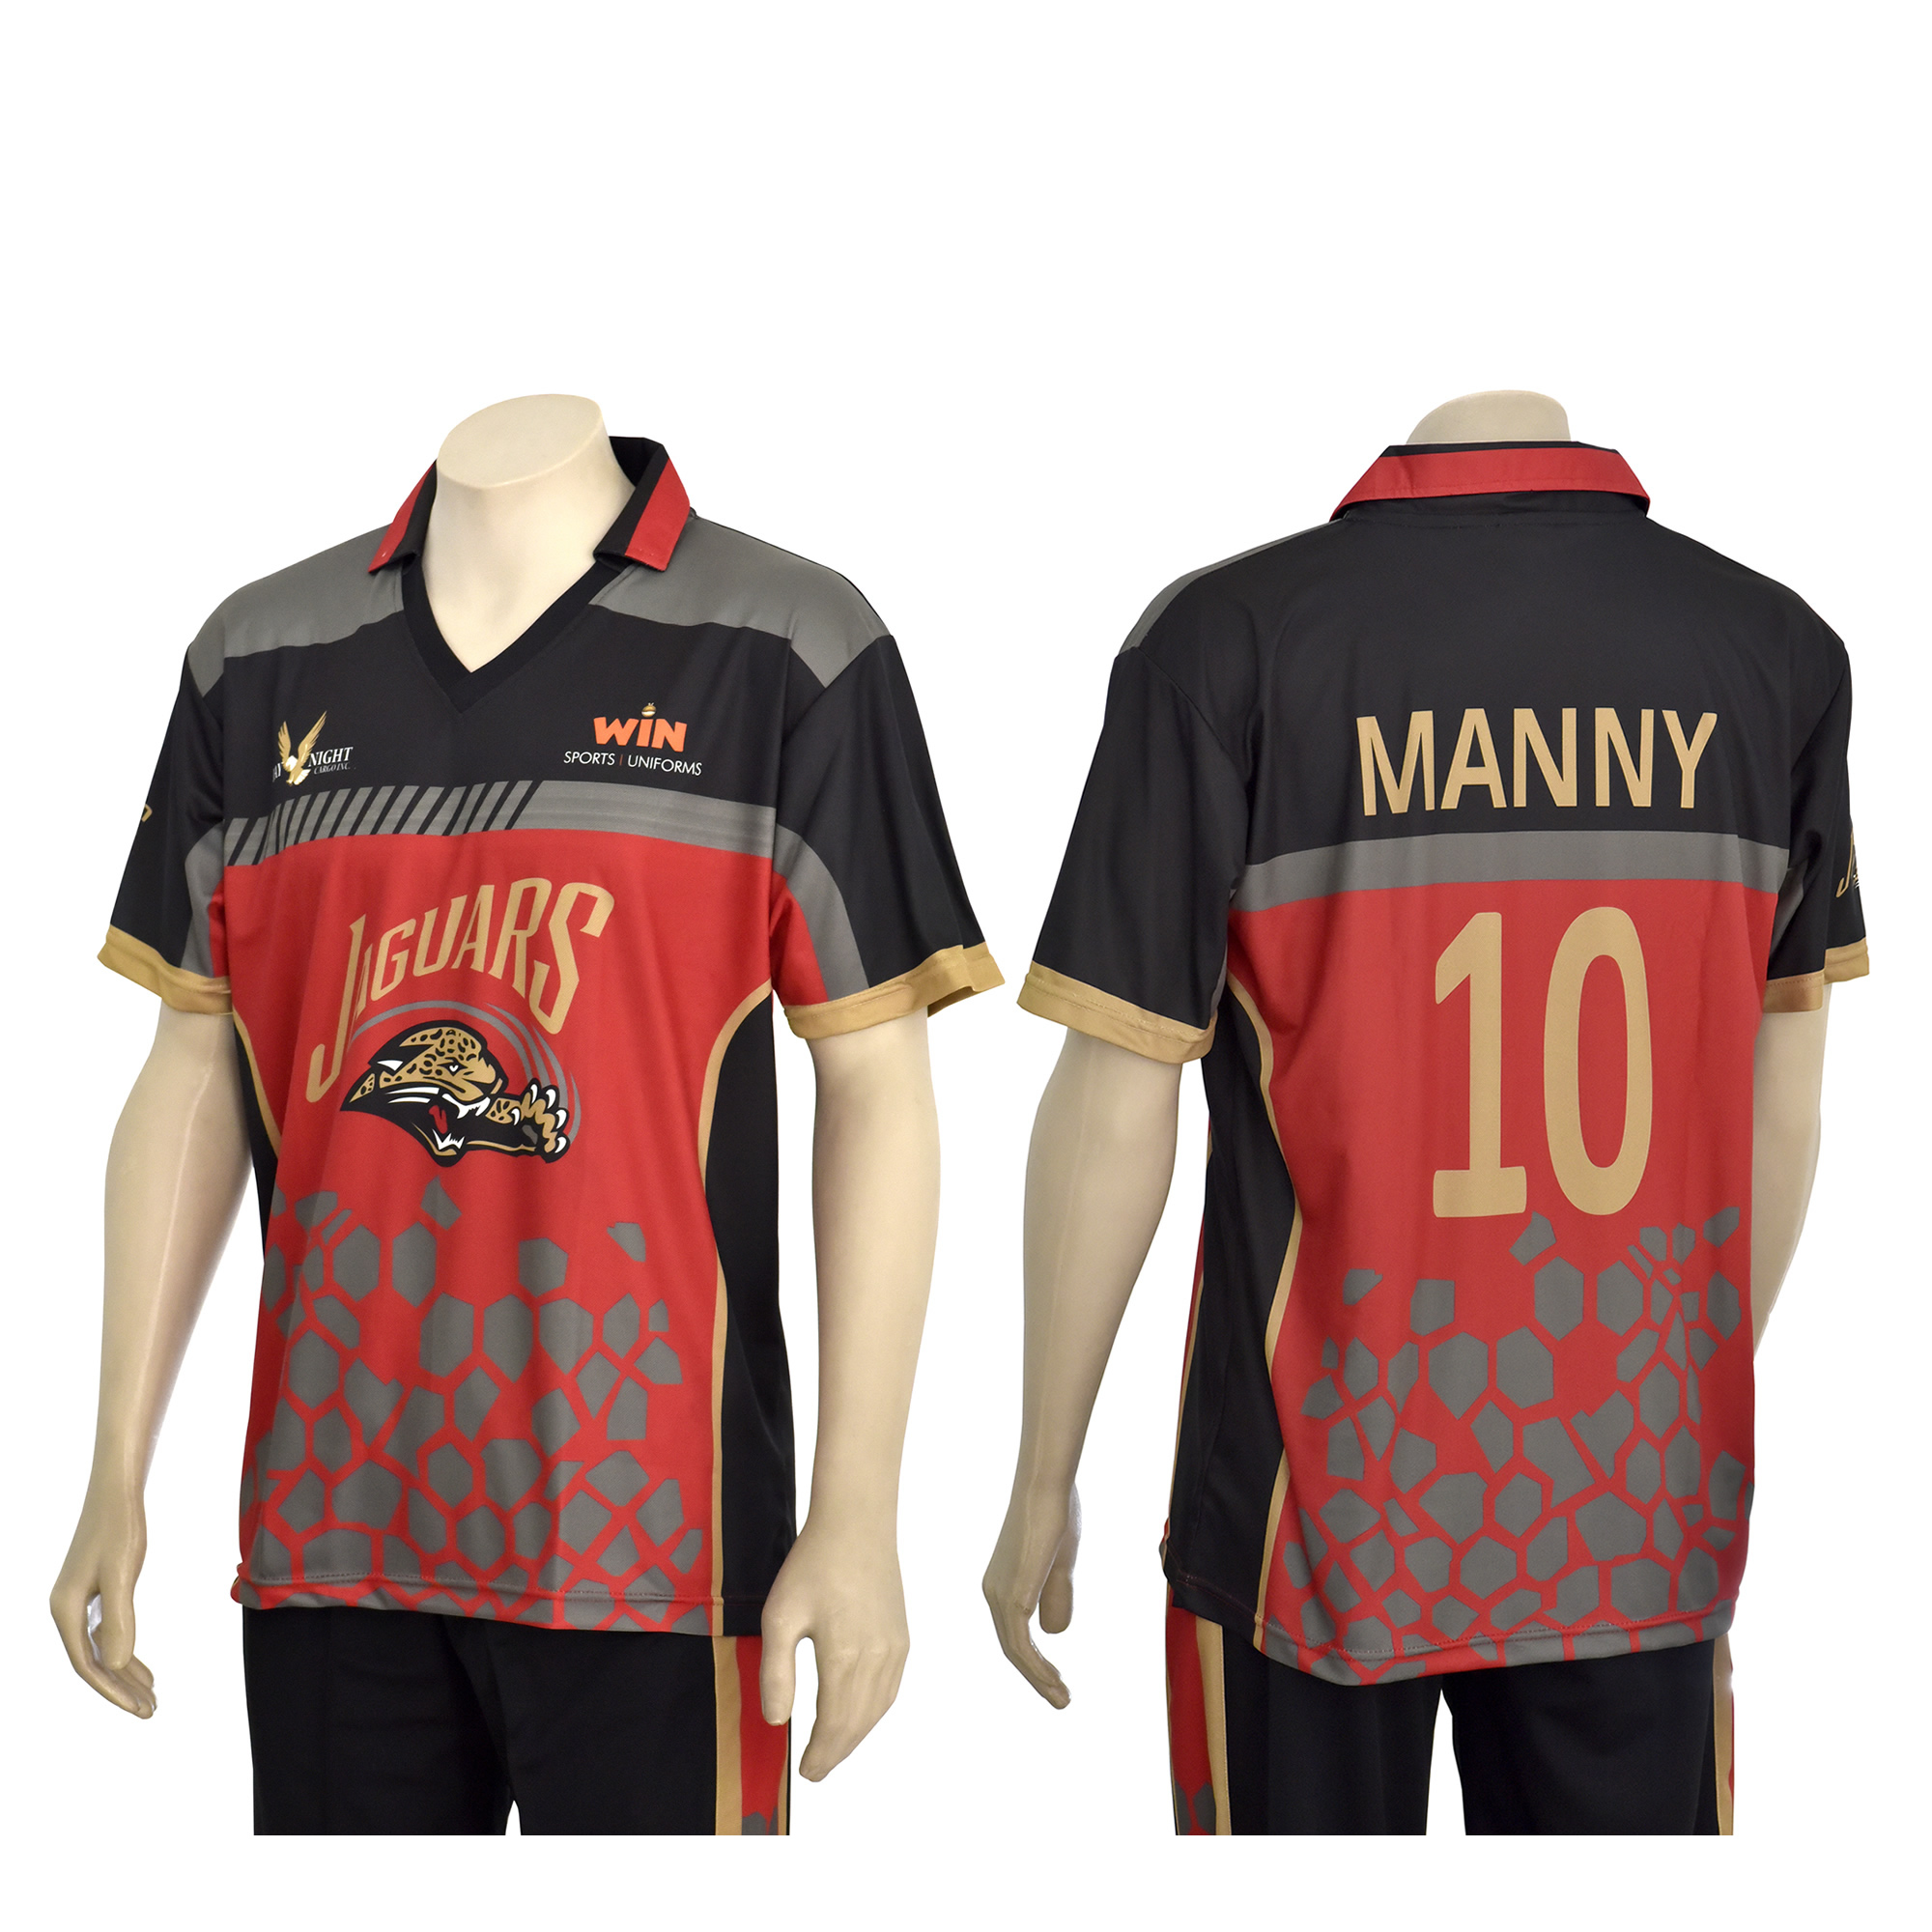 cricket jersey custom design